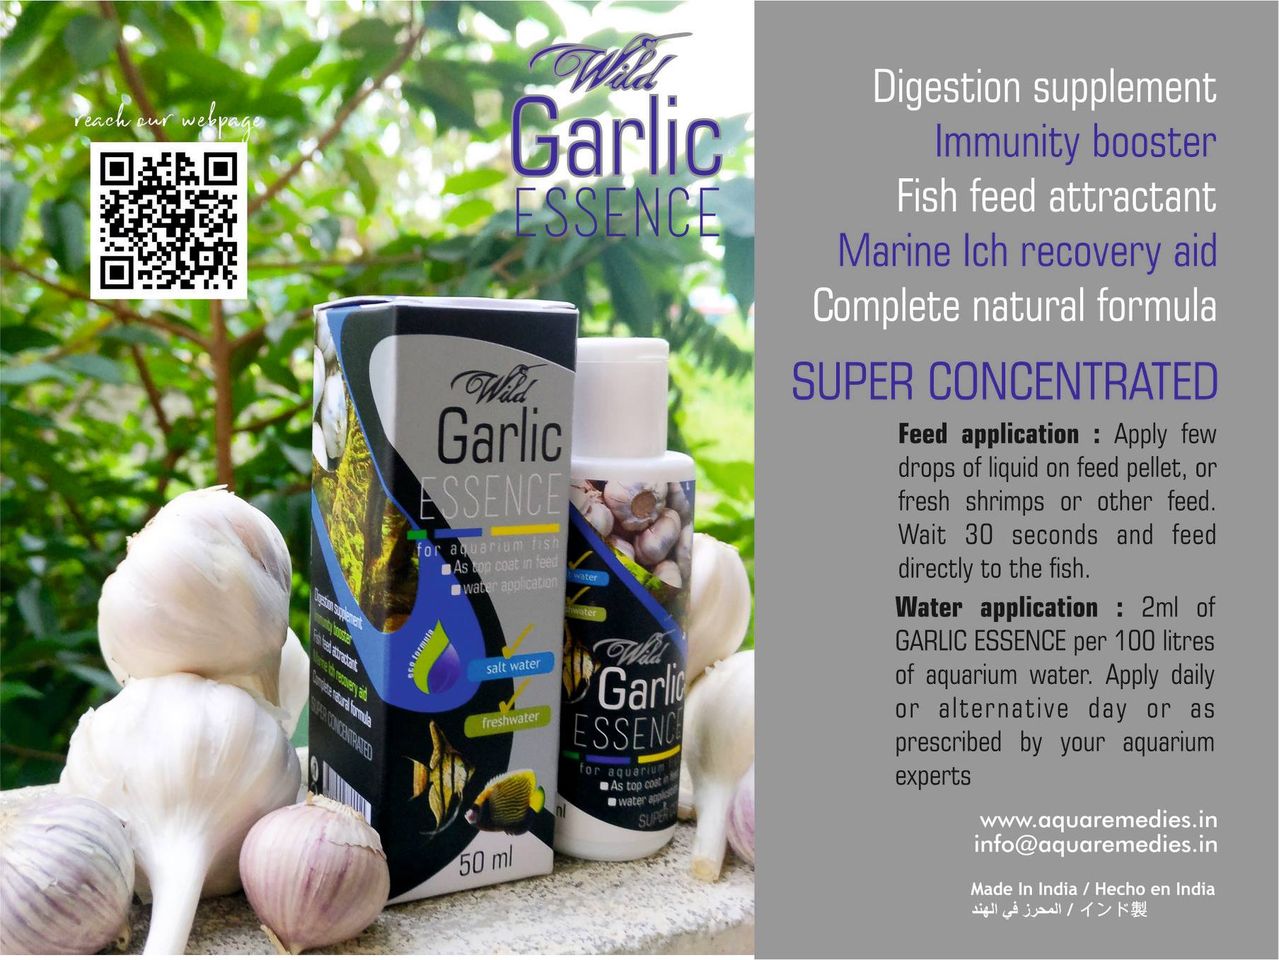 Aquatic Remedies WILD Garlic Essence, 50ML | Digestion Supplement & Immunity Booster